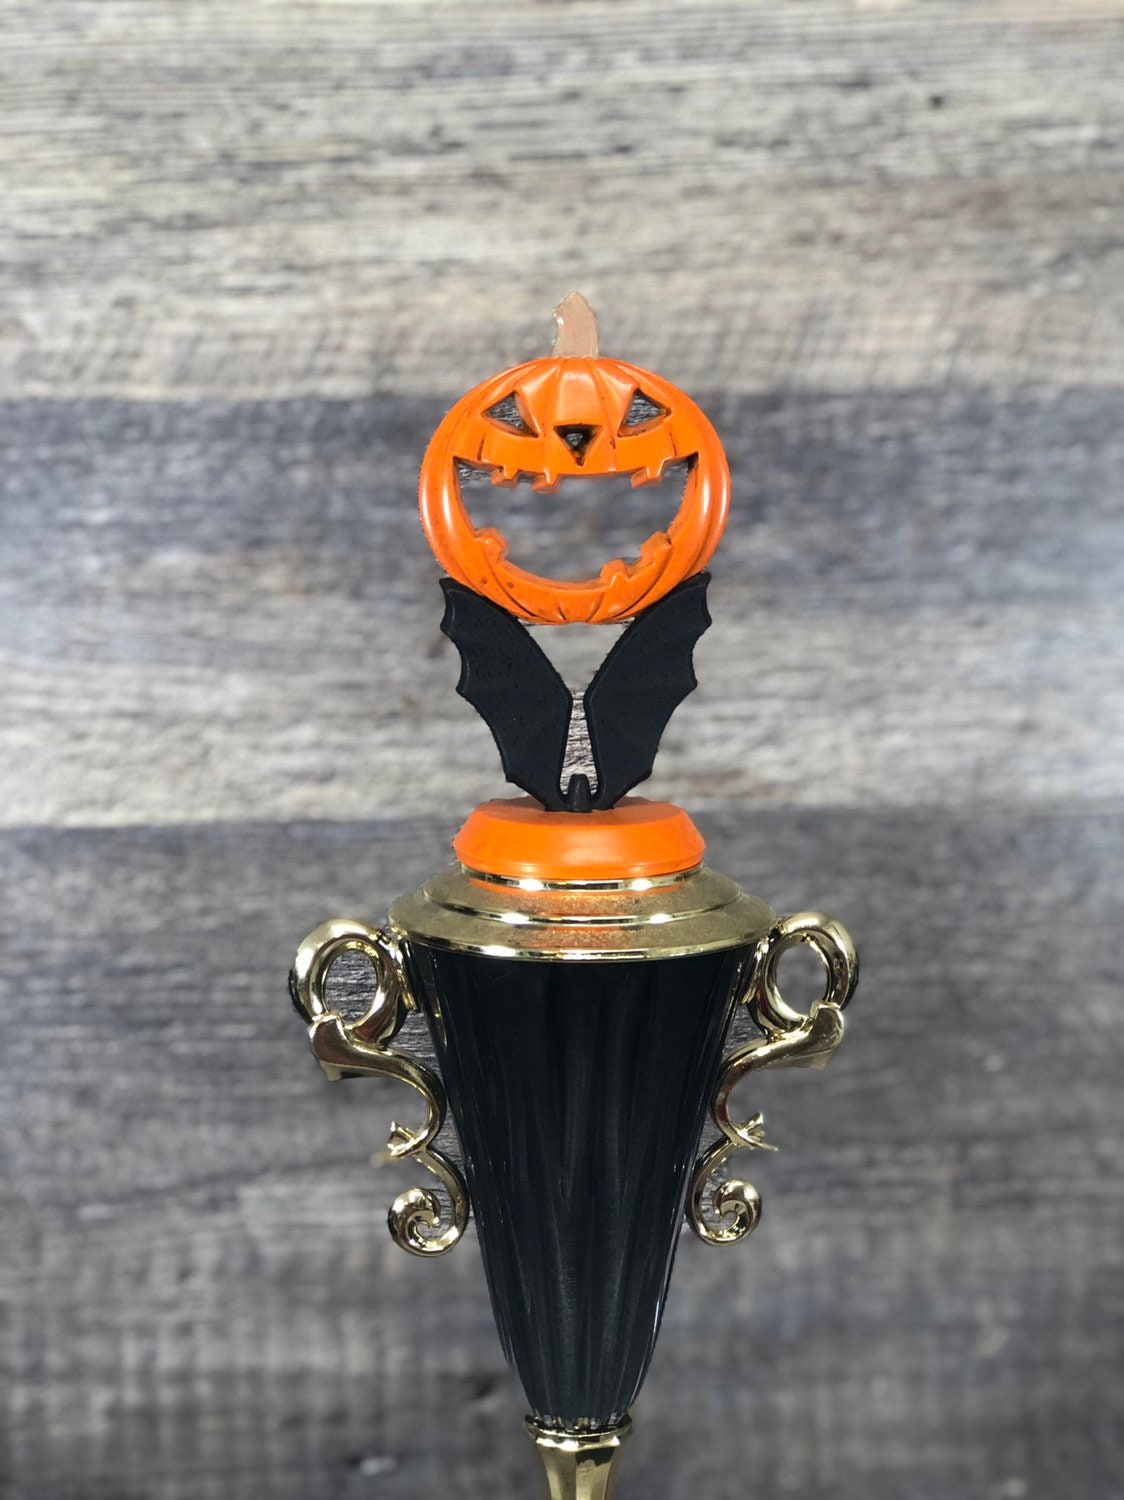 Halloween Trophy Pumpkin Carving Contest Winner Costume Contest Black Bat Halloween Decor Jack O Lantern Trunk Or Treat Pumpkin Decor